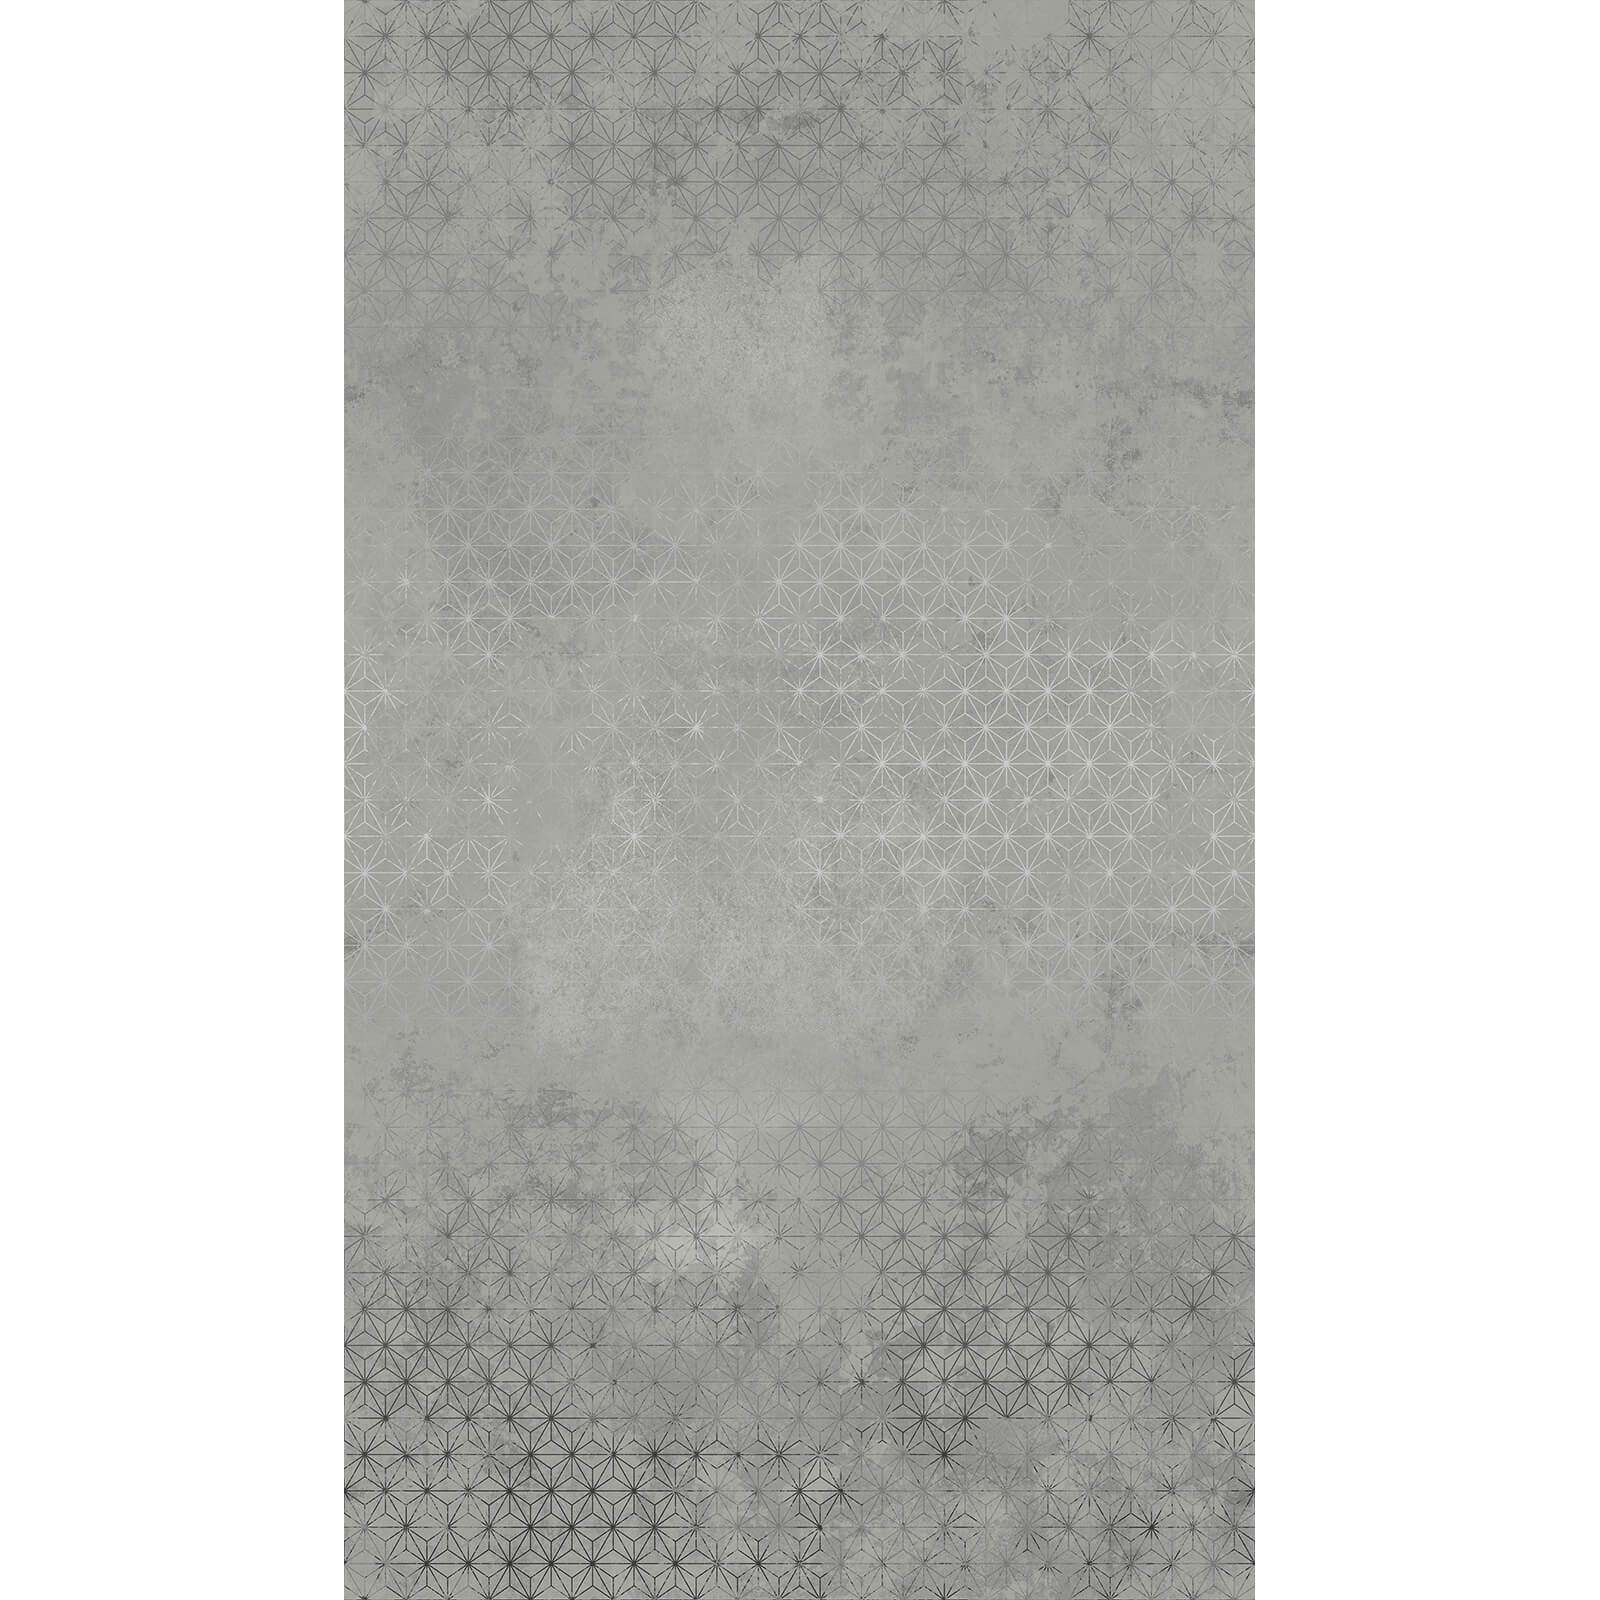 Grandeco Concrete Stars Grey Digital Wallpaper Mural